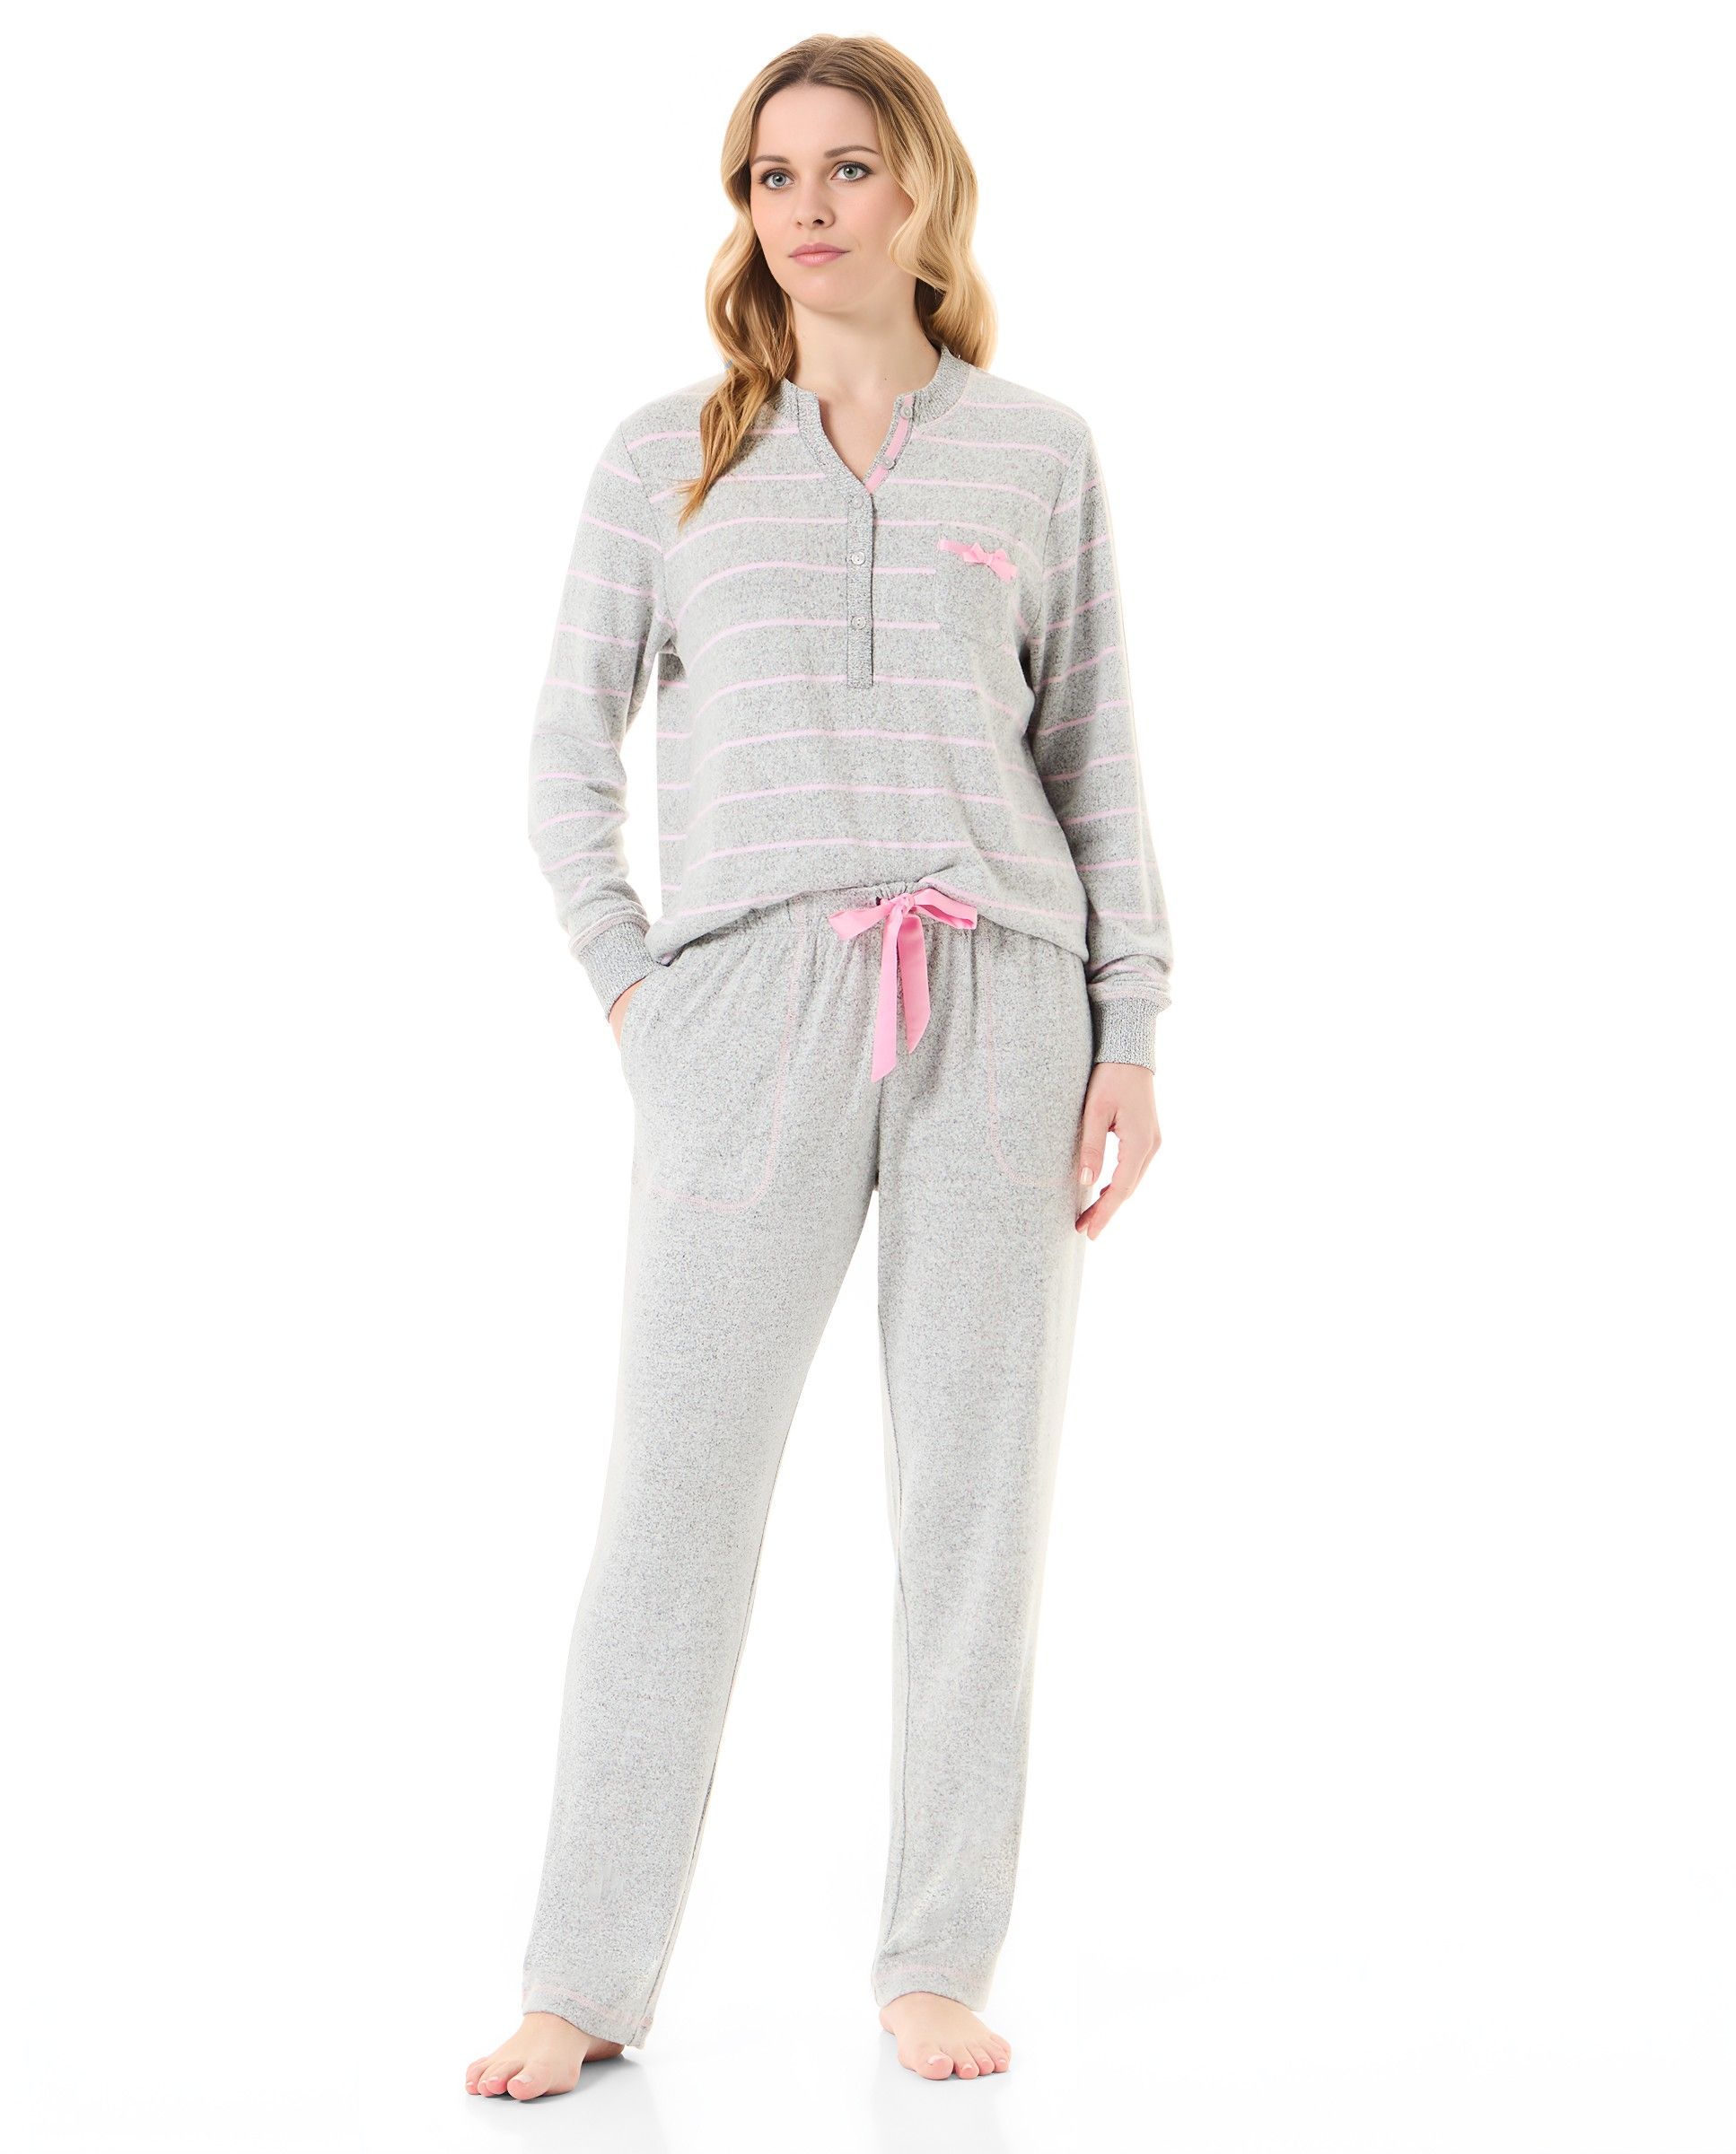 Woman with long-sleeved pink winter pyjamas vigore striped long sleeves